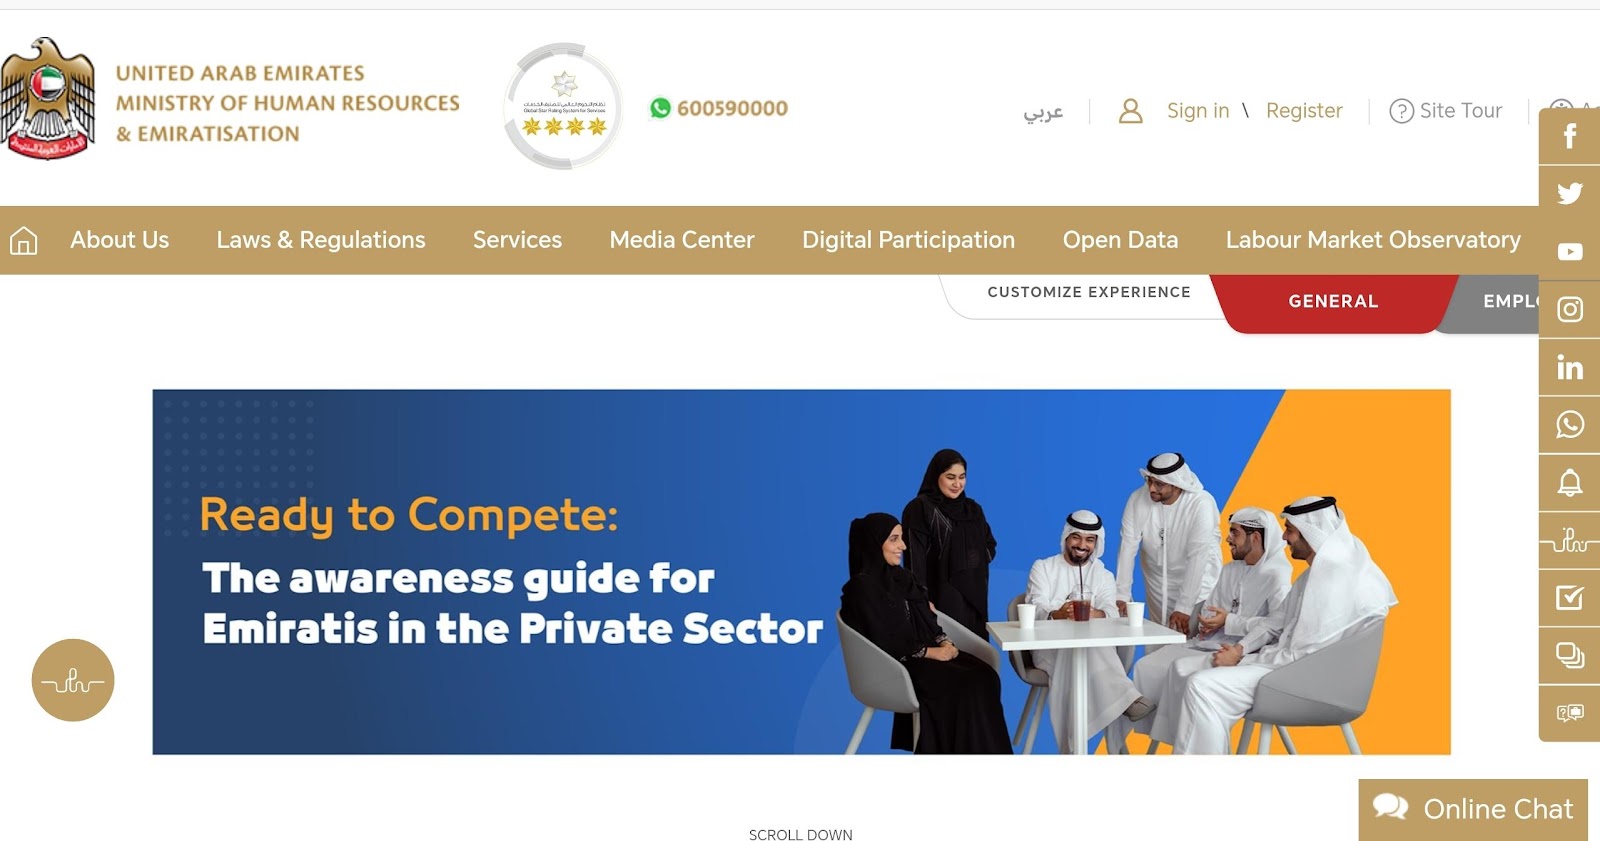 UAE ministry of human resources & emiratisation